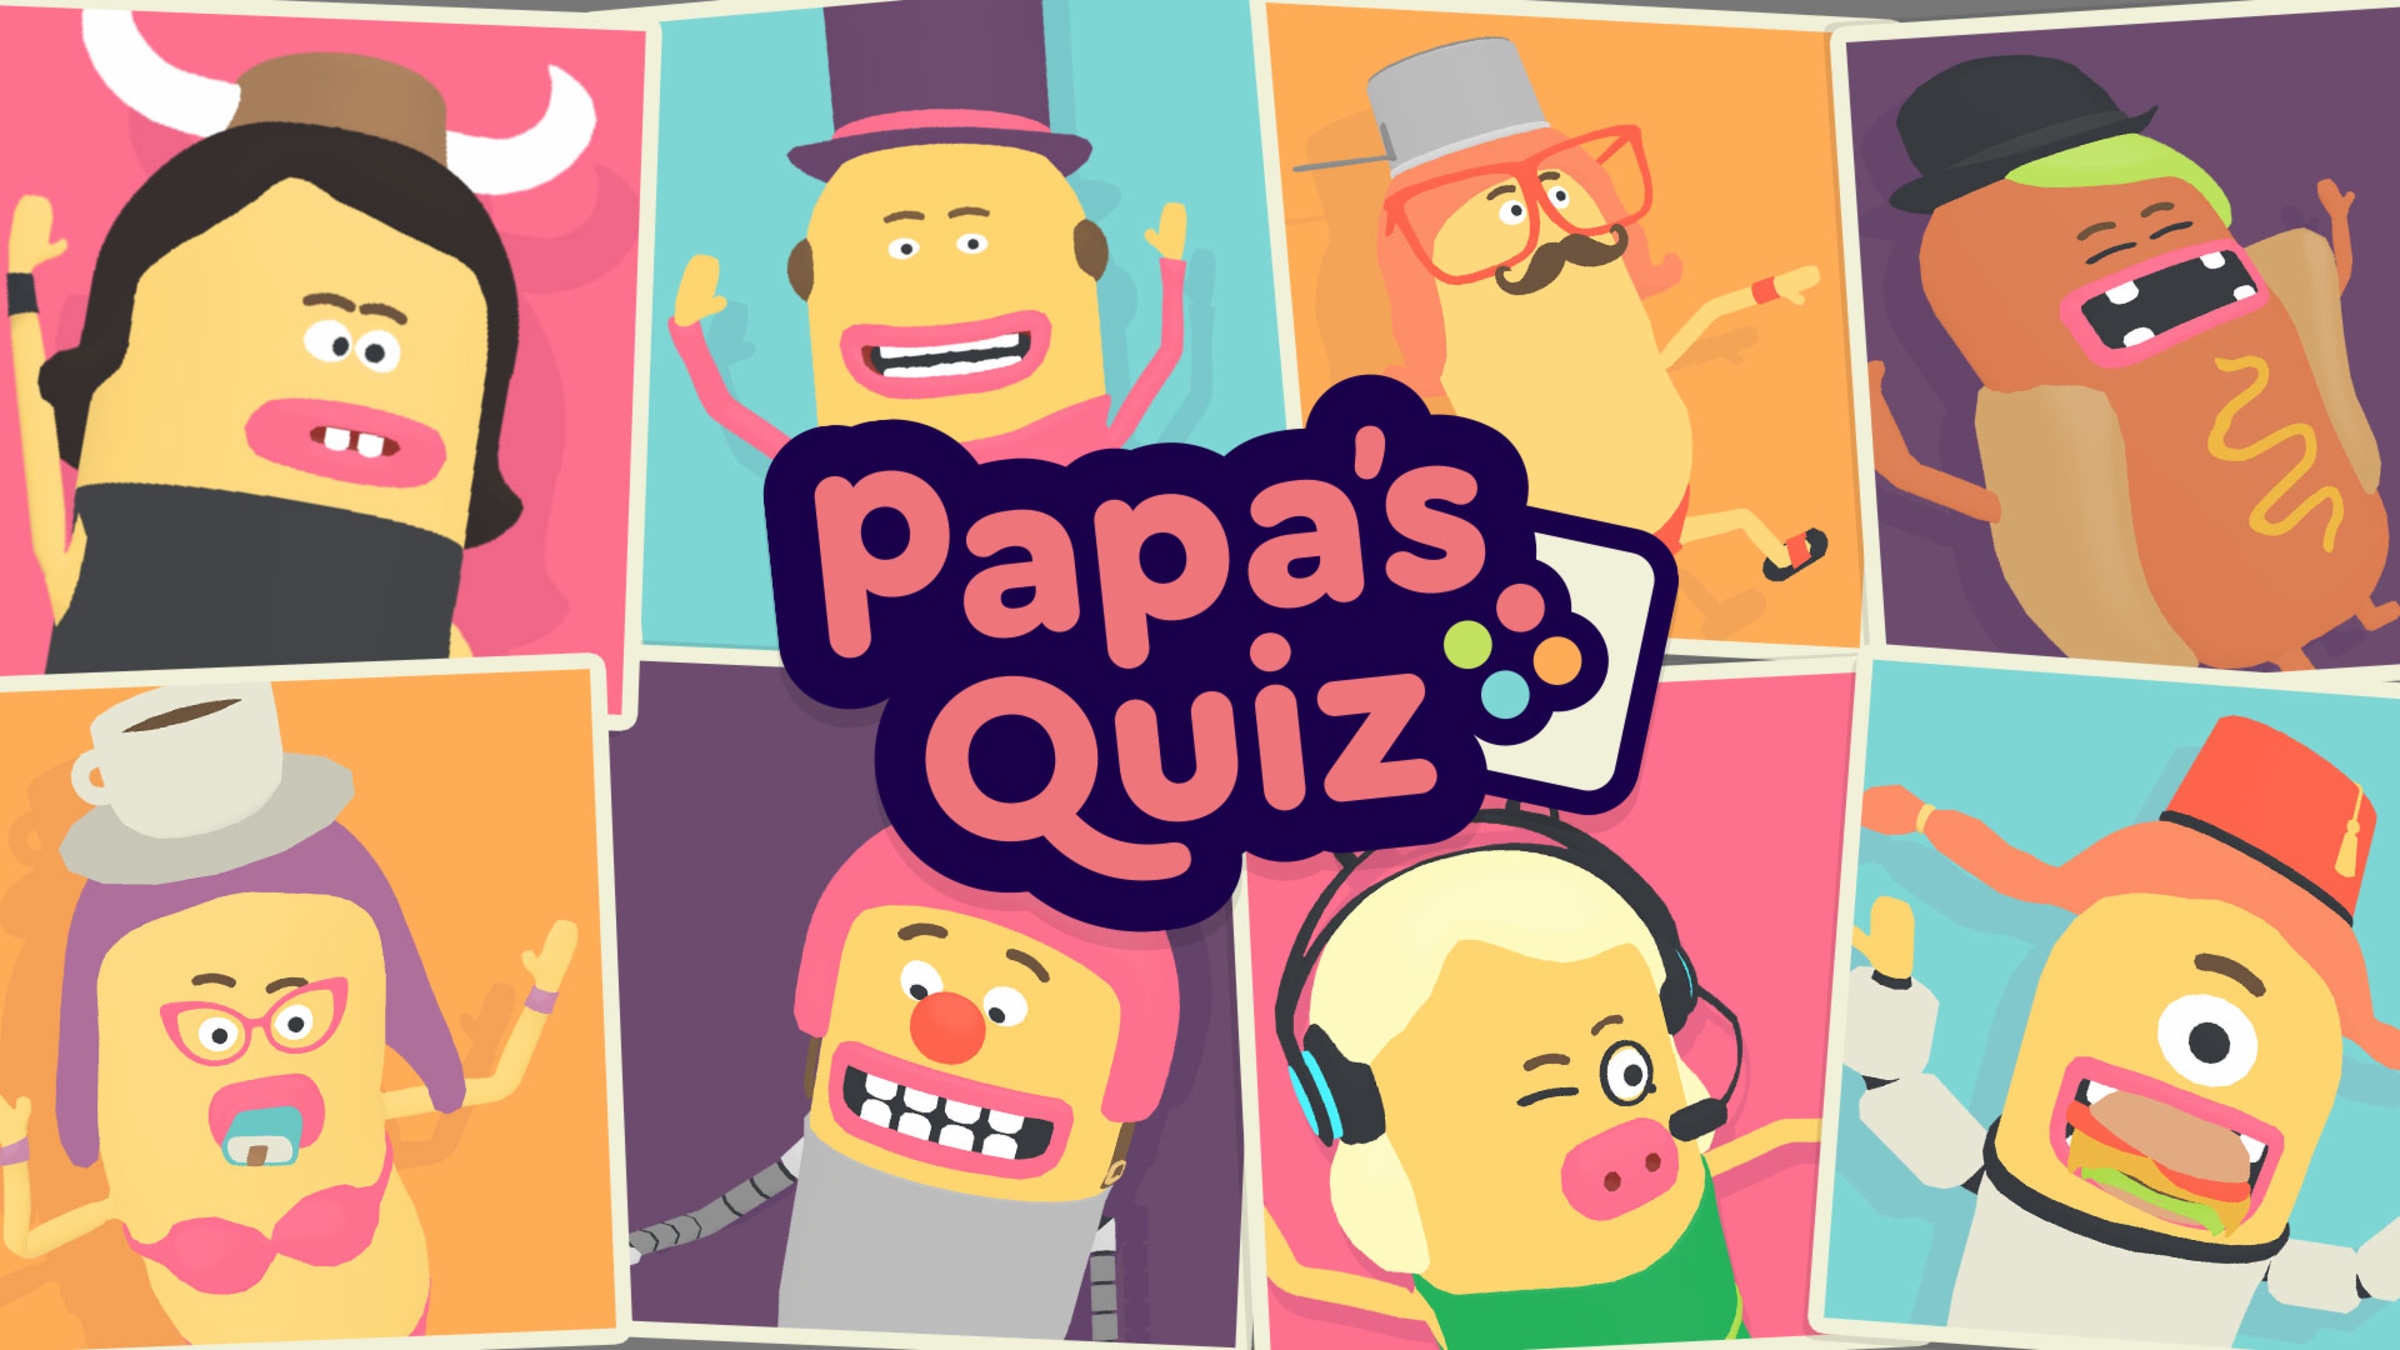 Papa's Quiz for Nintendo Switch - Nintendo Official Site